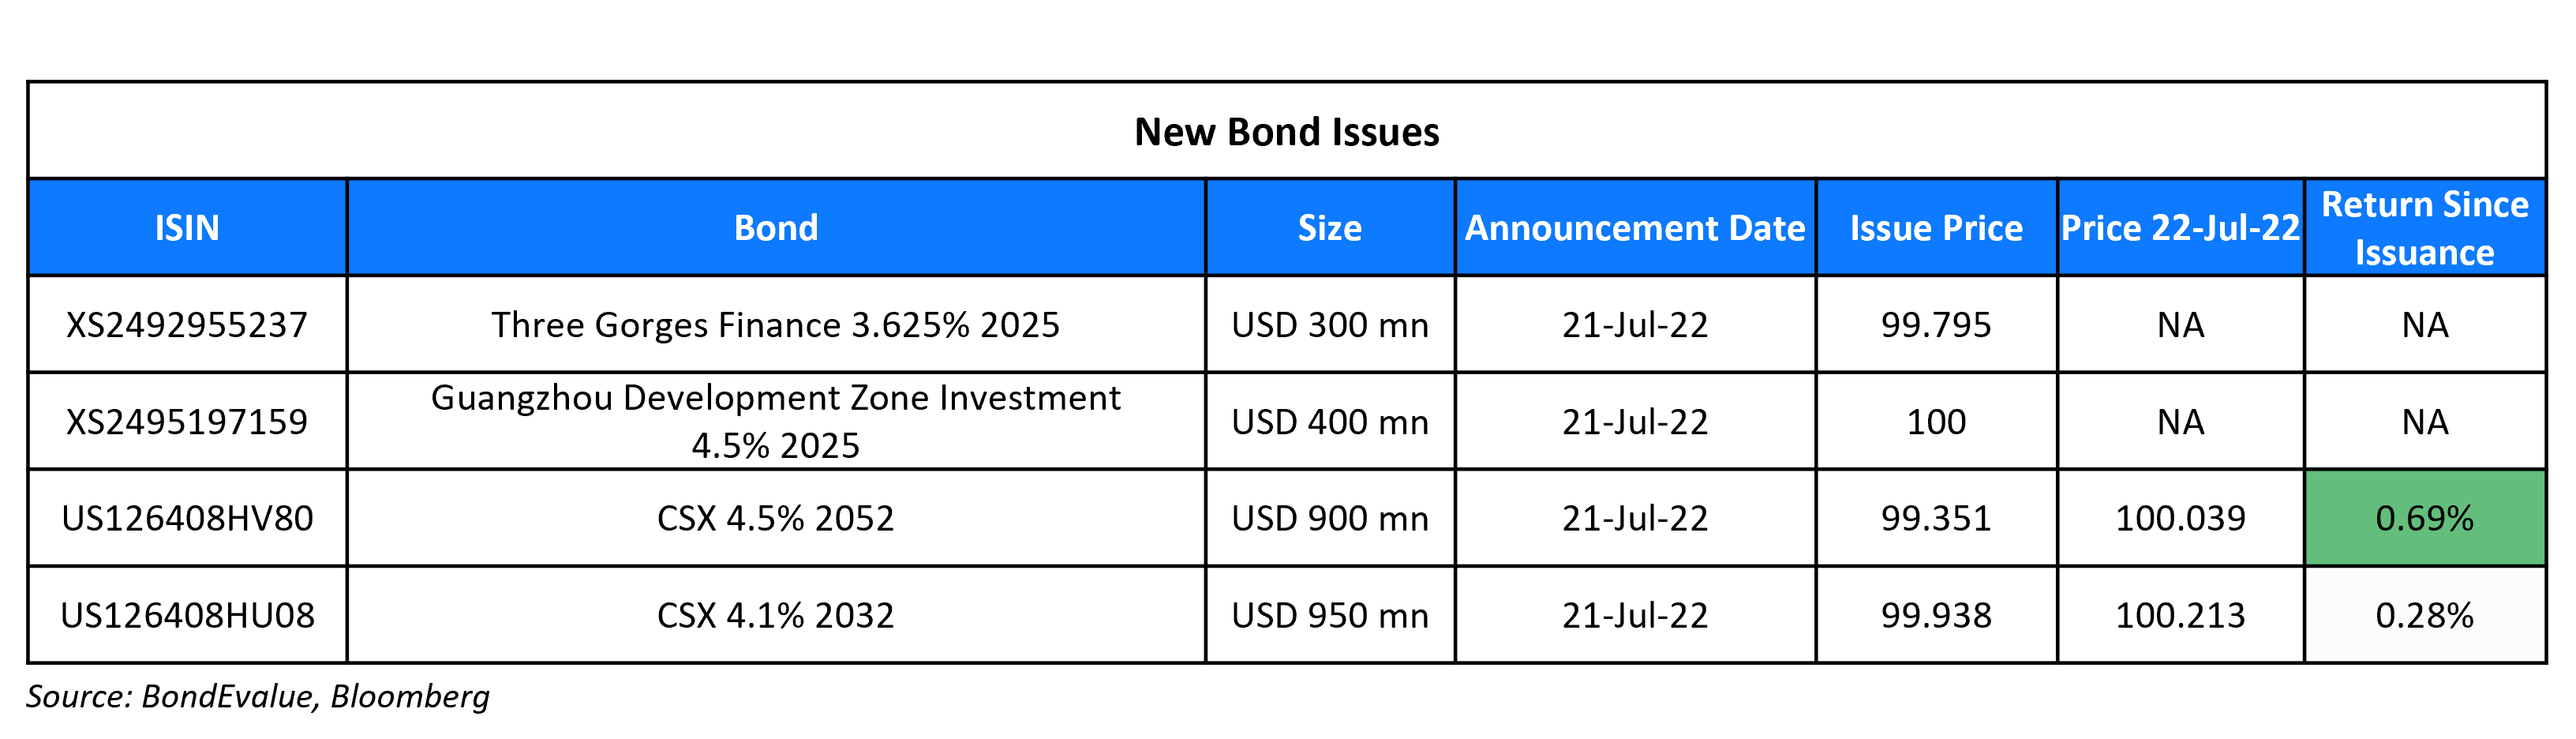 New Bond Issues 22 Jul 22